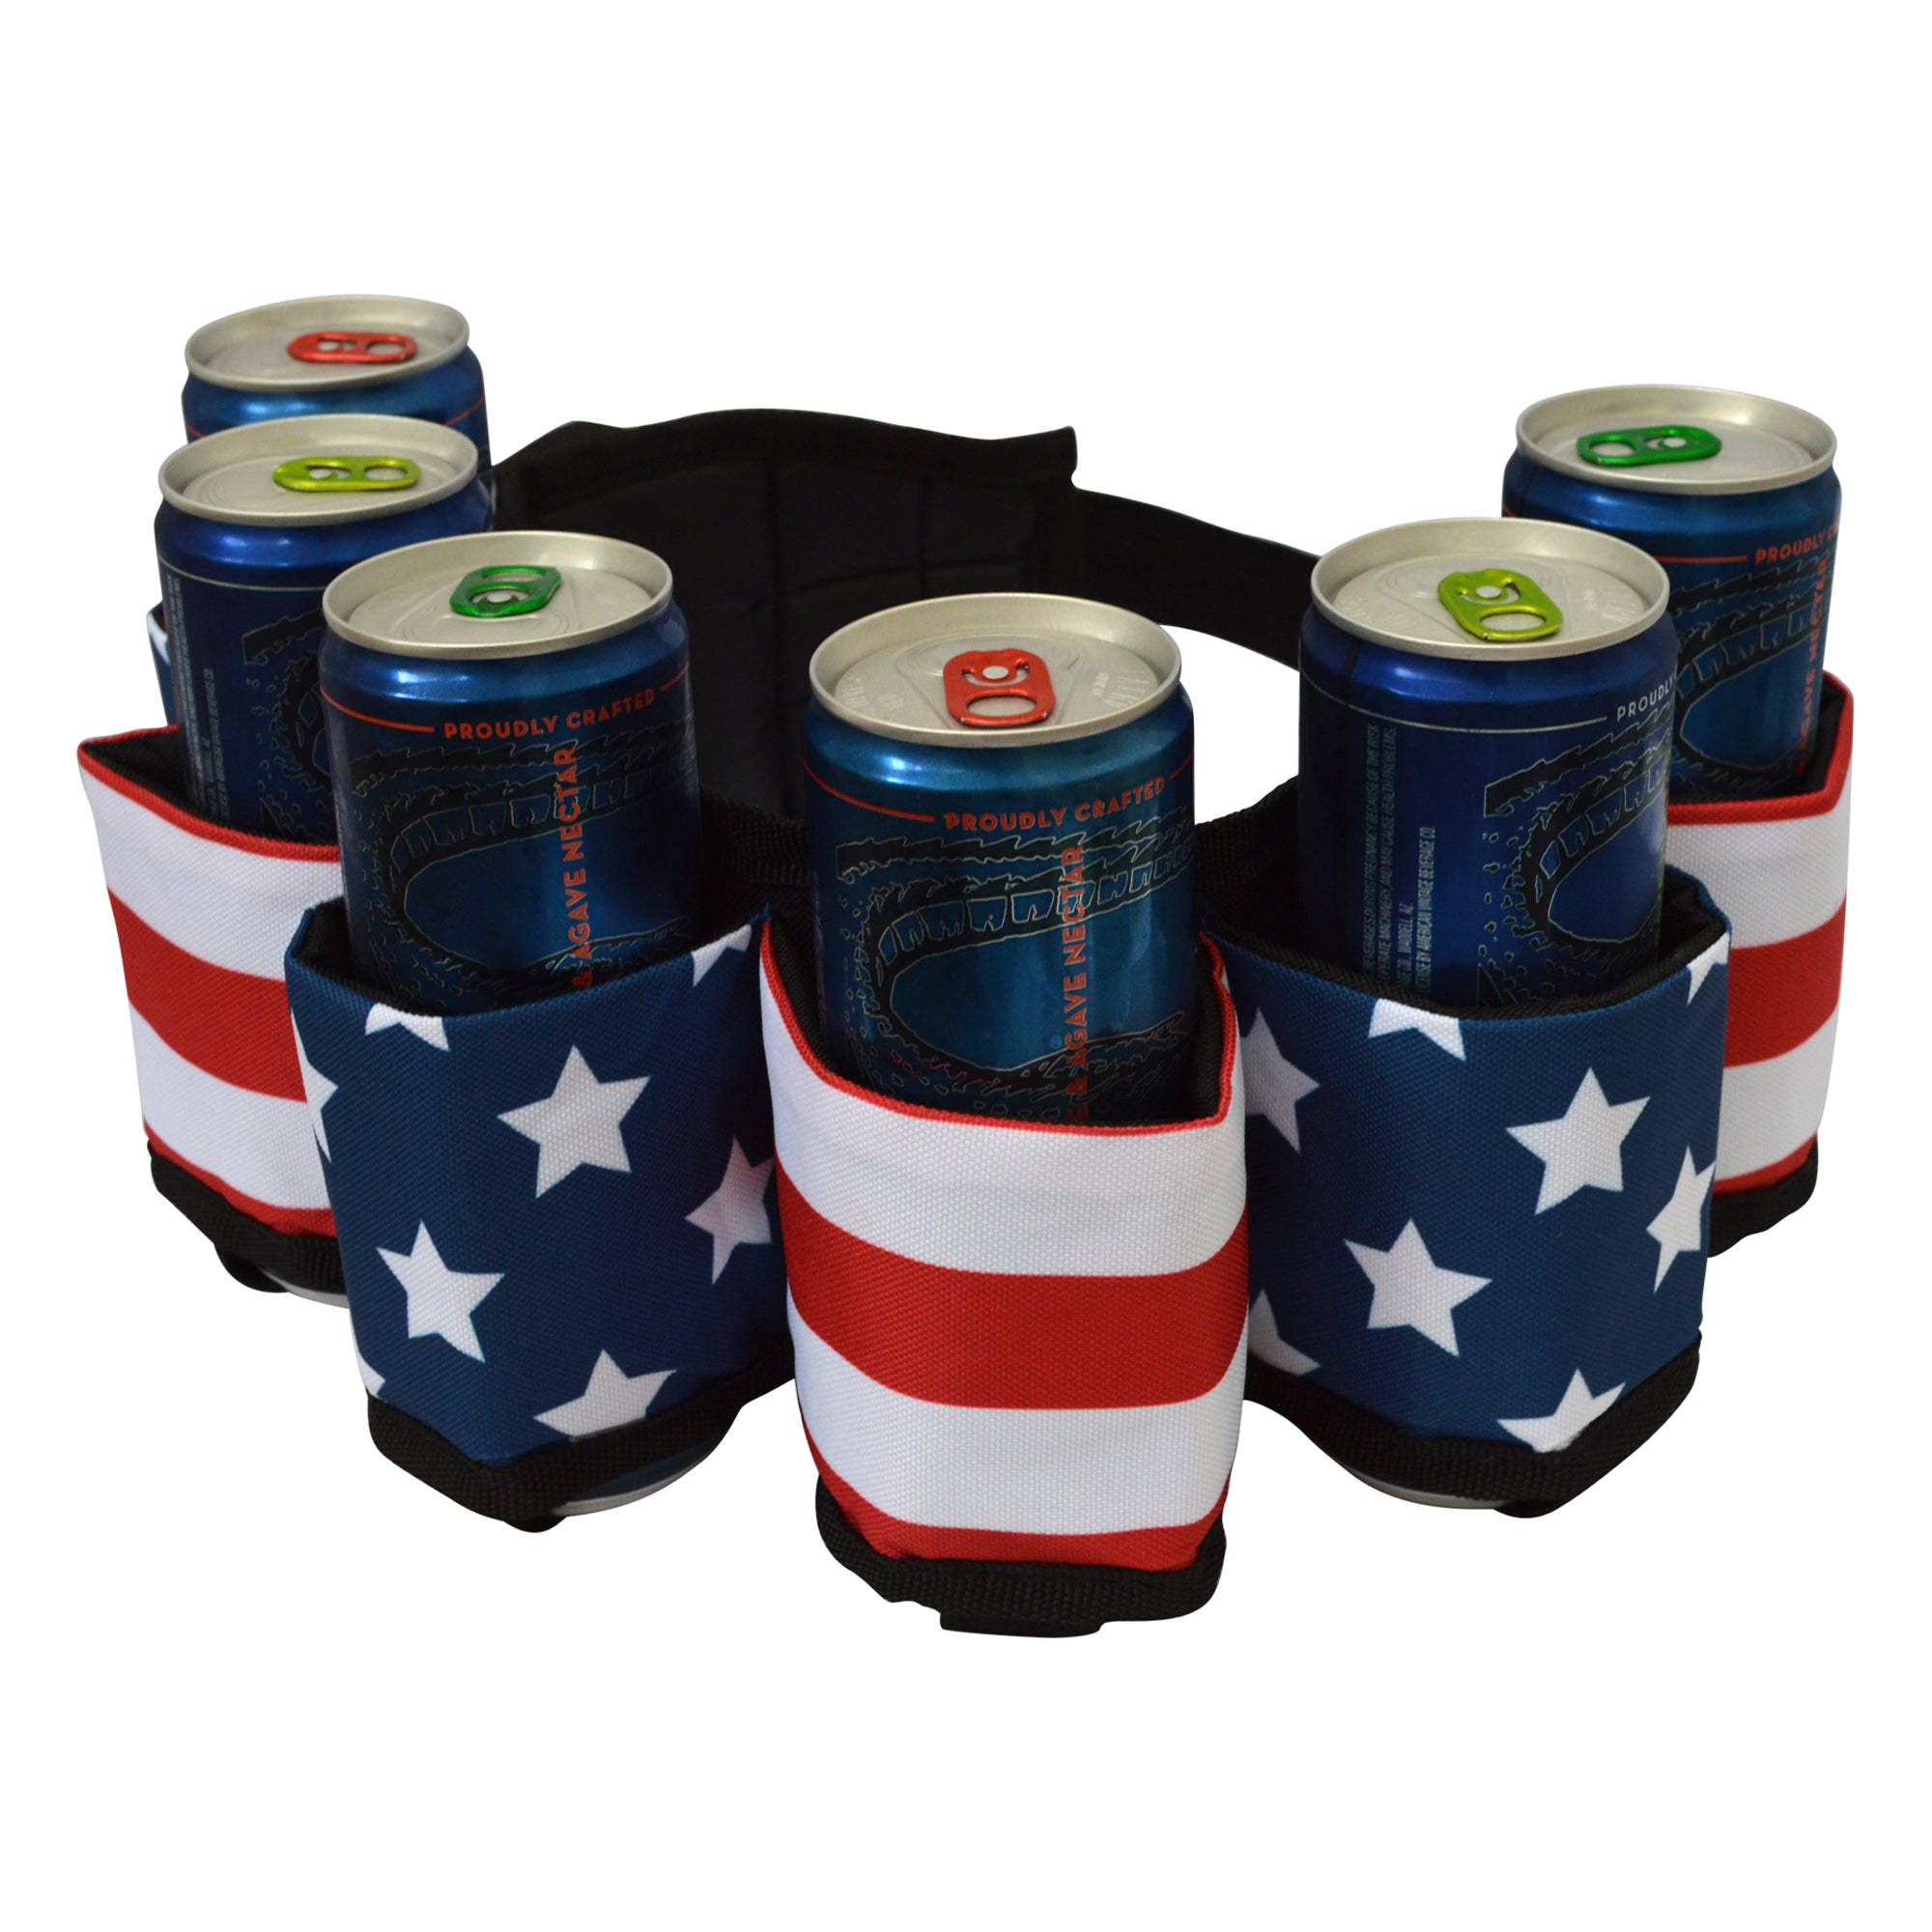 Beer Belt - Beer Holster - Redneck Beer Holder - Holds 6 Beers